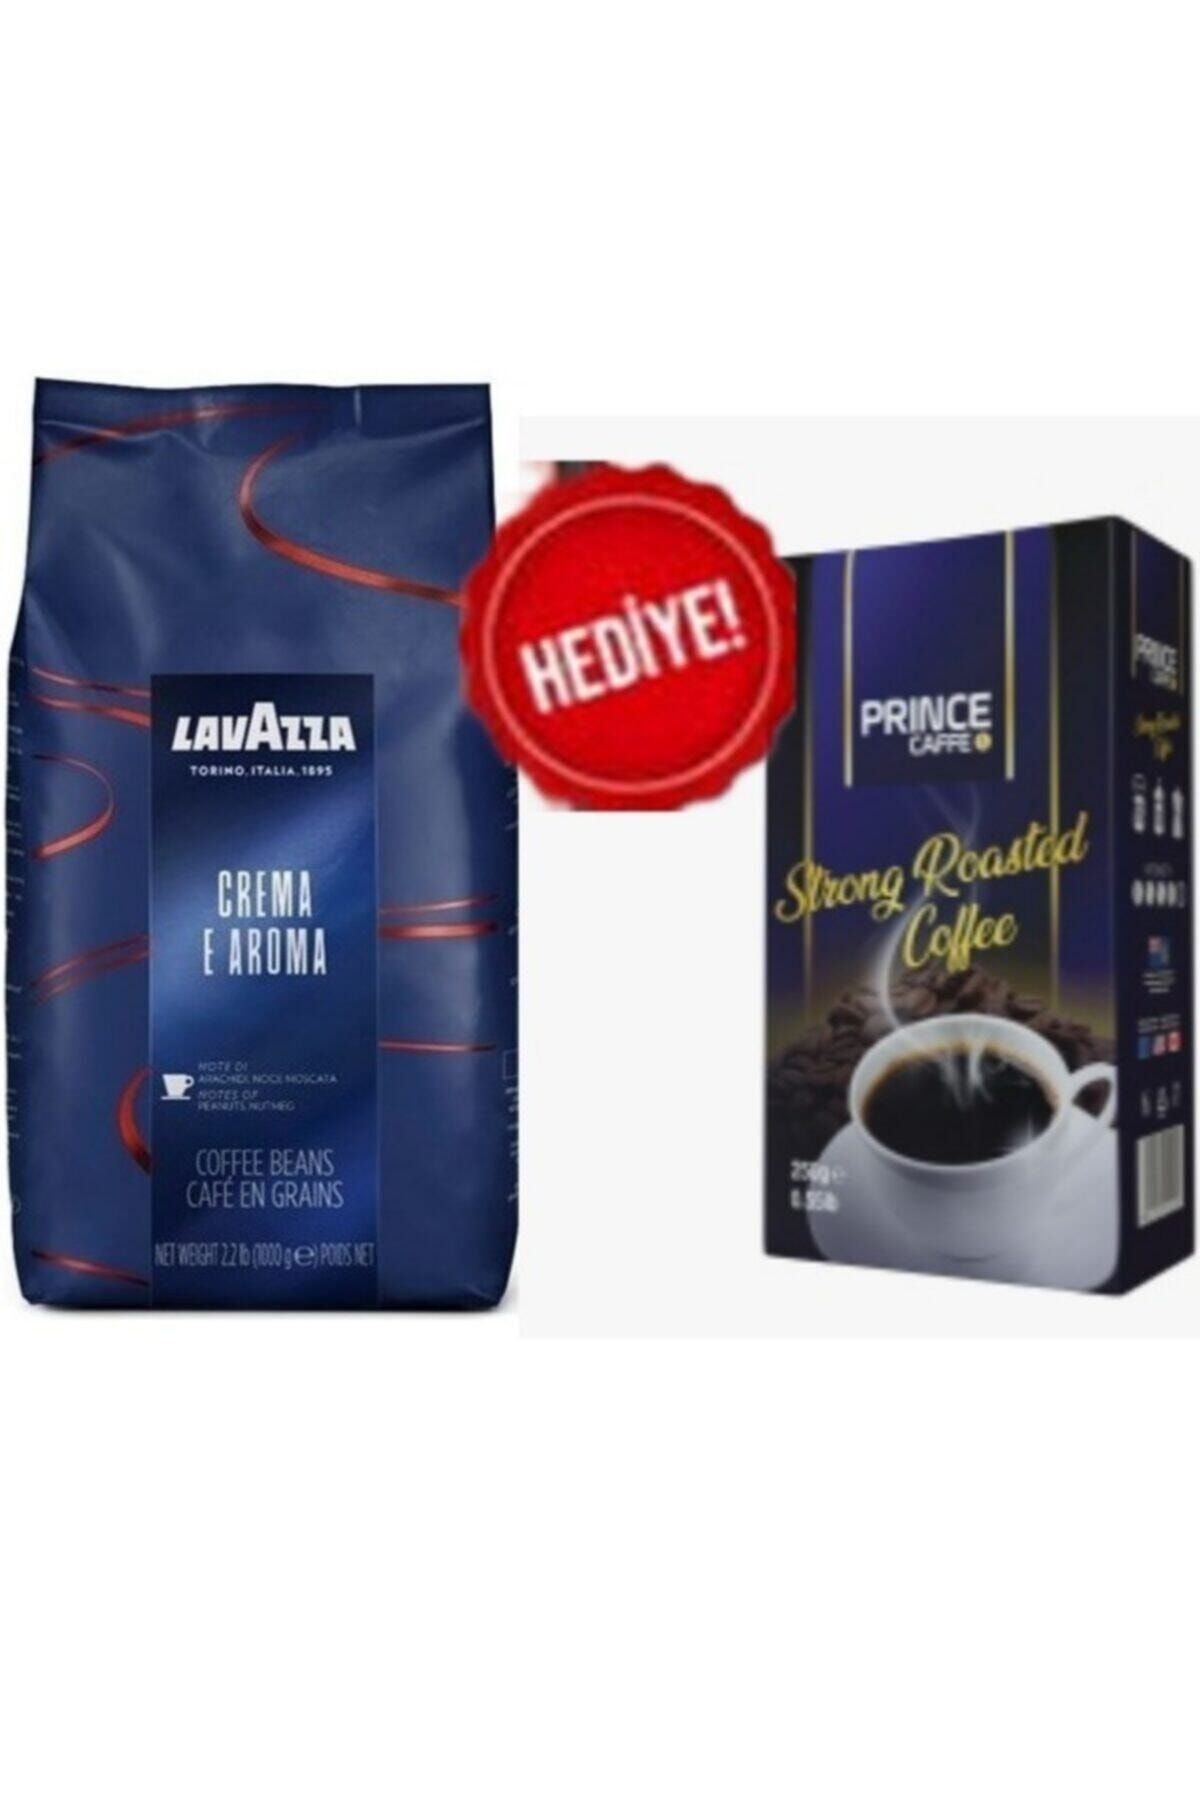 LavAzza Espresso Crema E Aroma 1 000 Gr Alana 250 Gr Grande Millenium Filtre Kahve Hediye